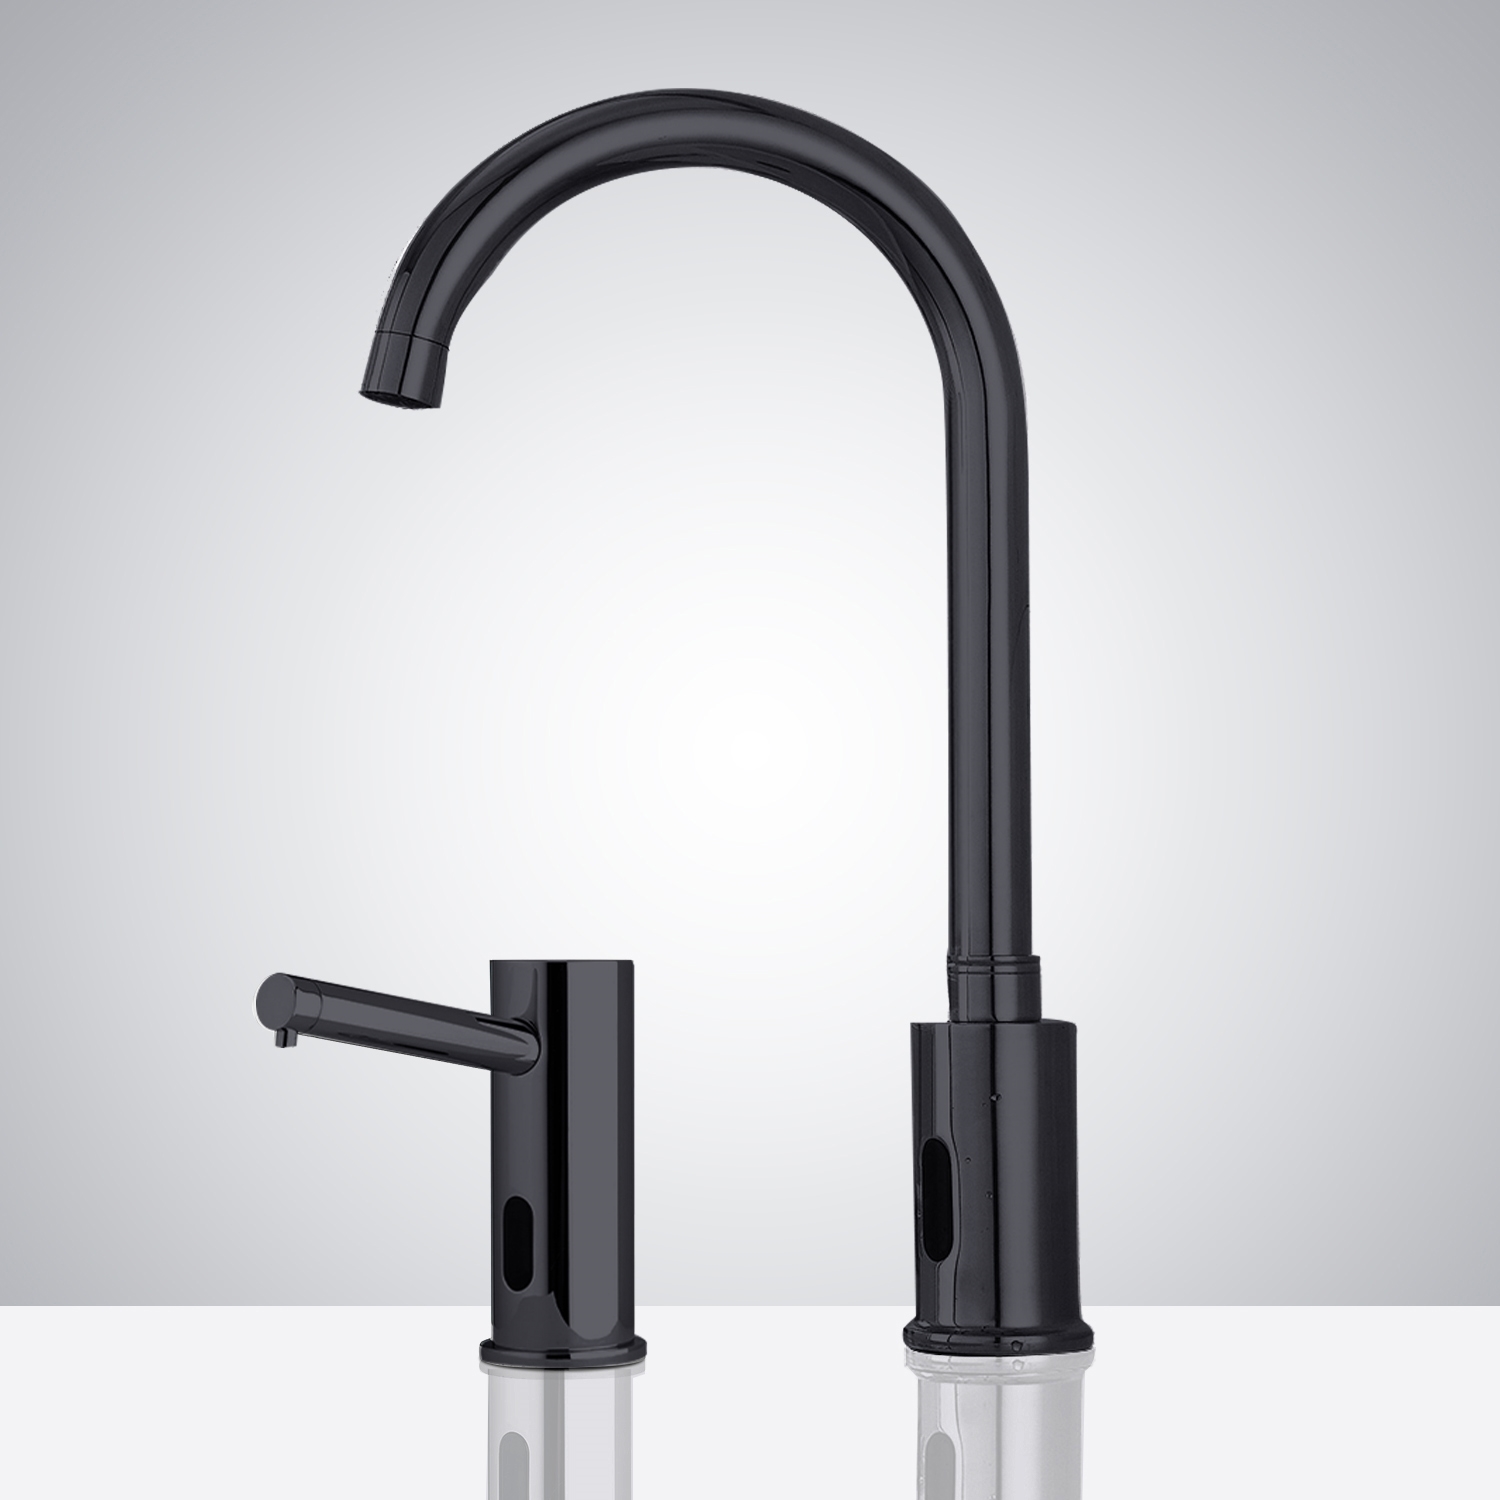 Fontana Gooseneck Dual Commercial Automatic Sensor Faucet and Soap Dispenser in Matte Black